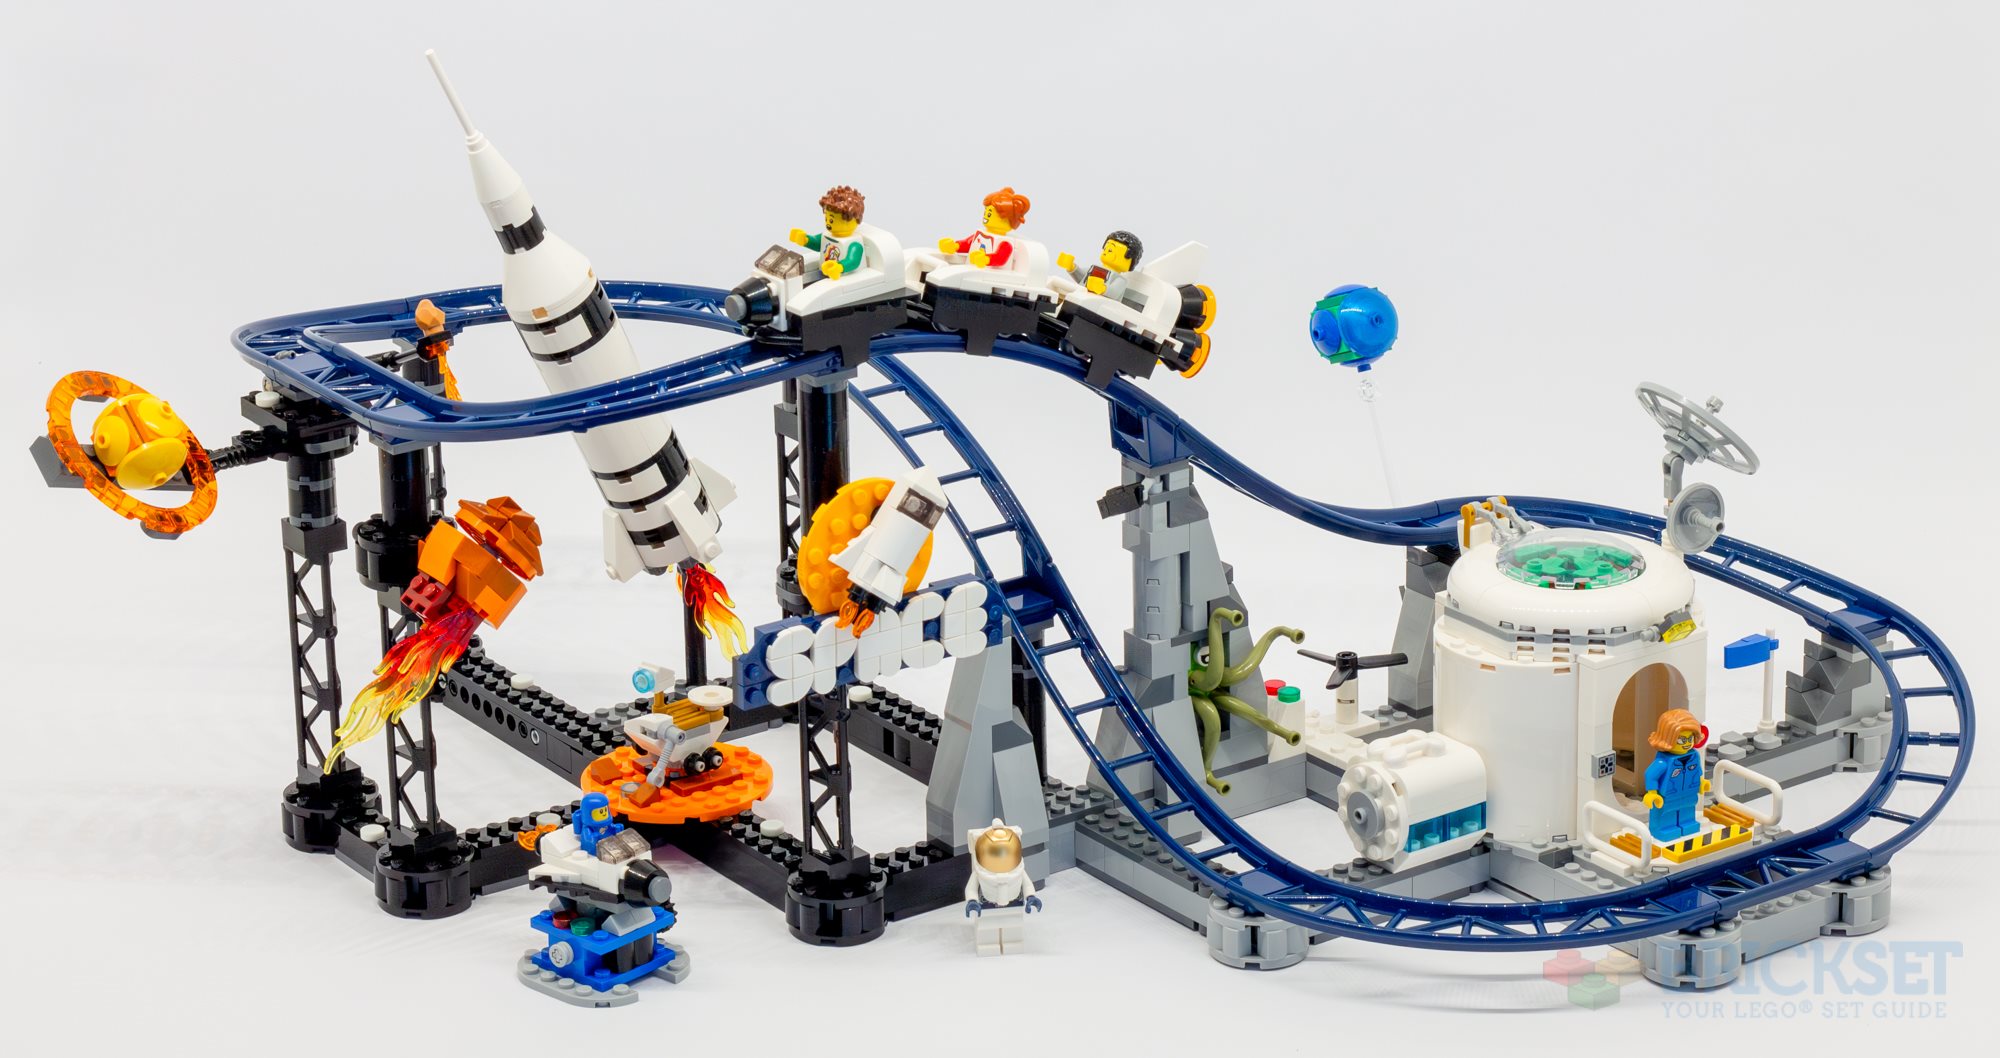 LEGO Creator Expert Roller Coaster Review